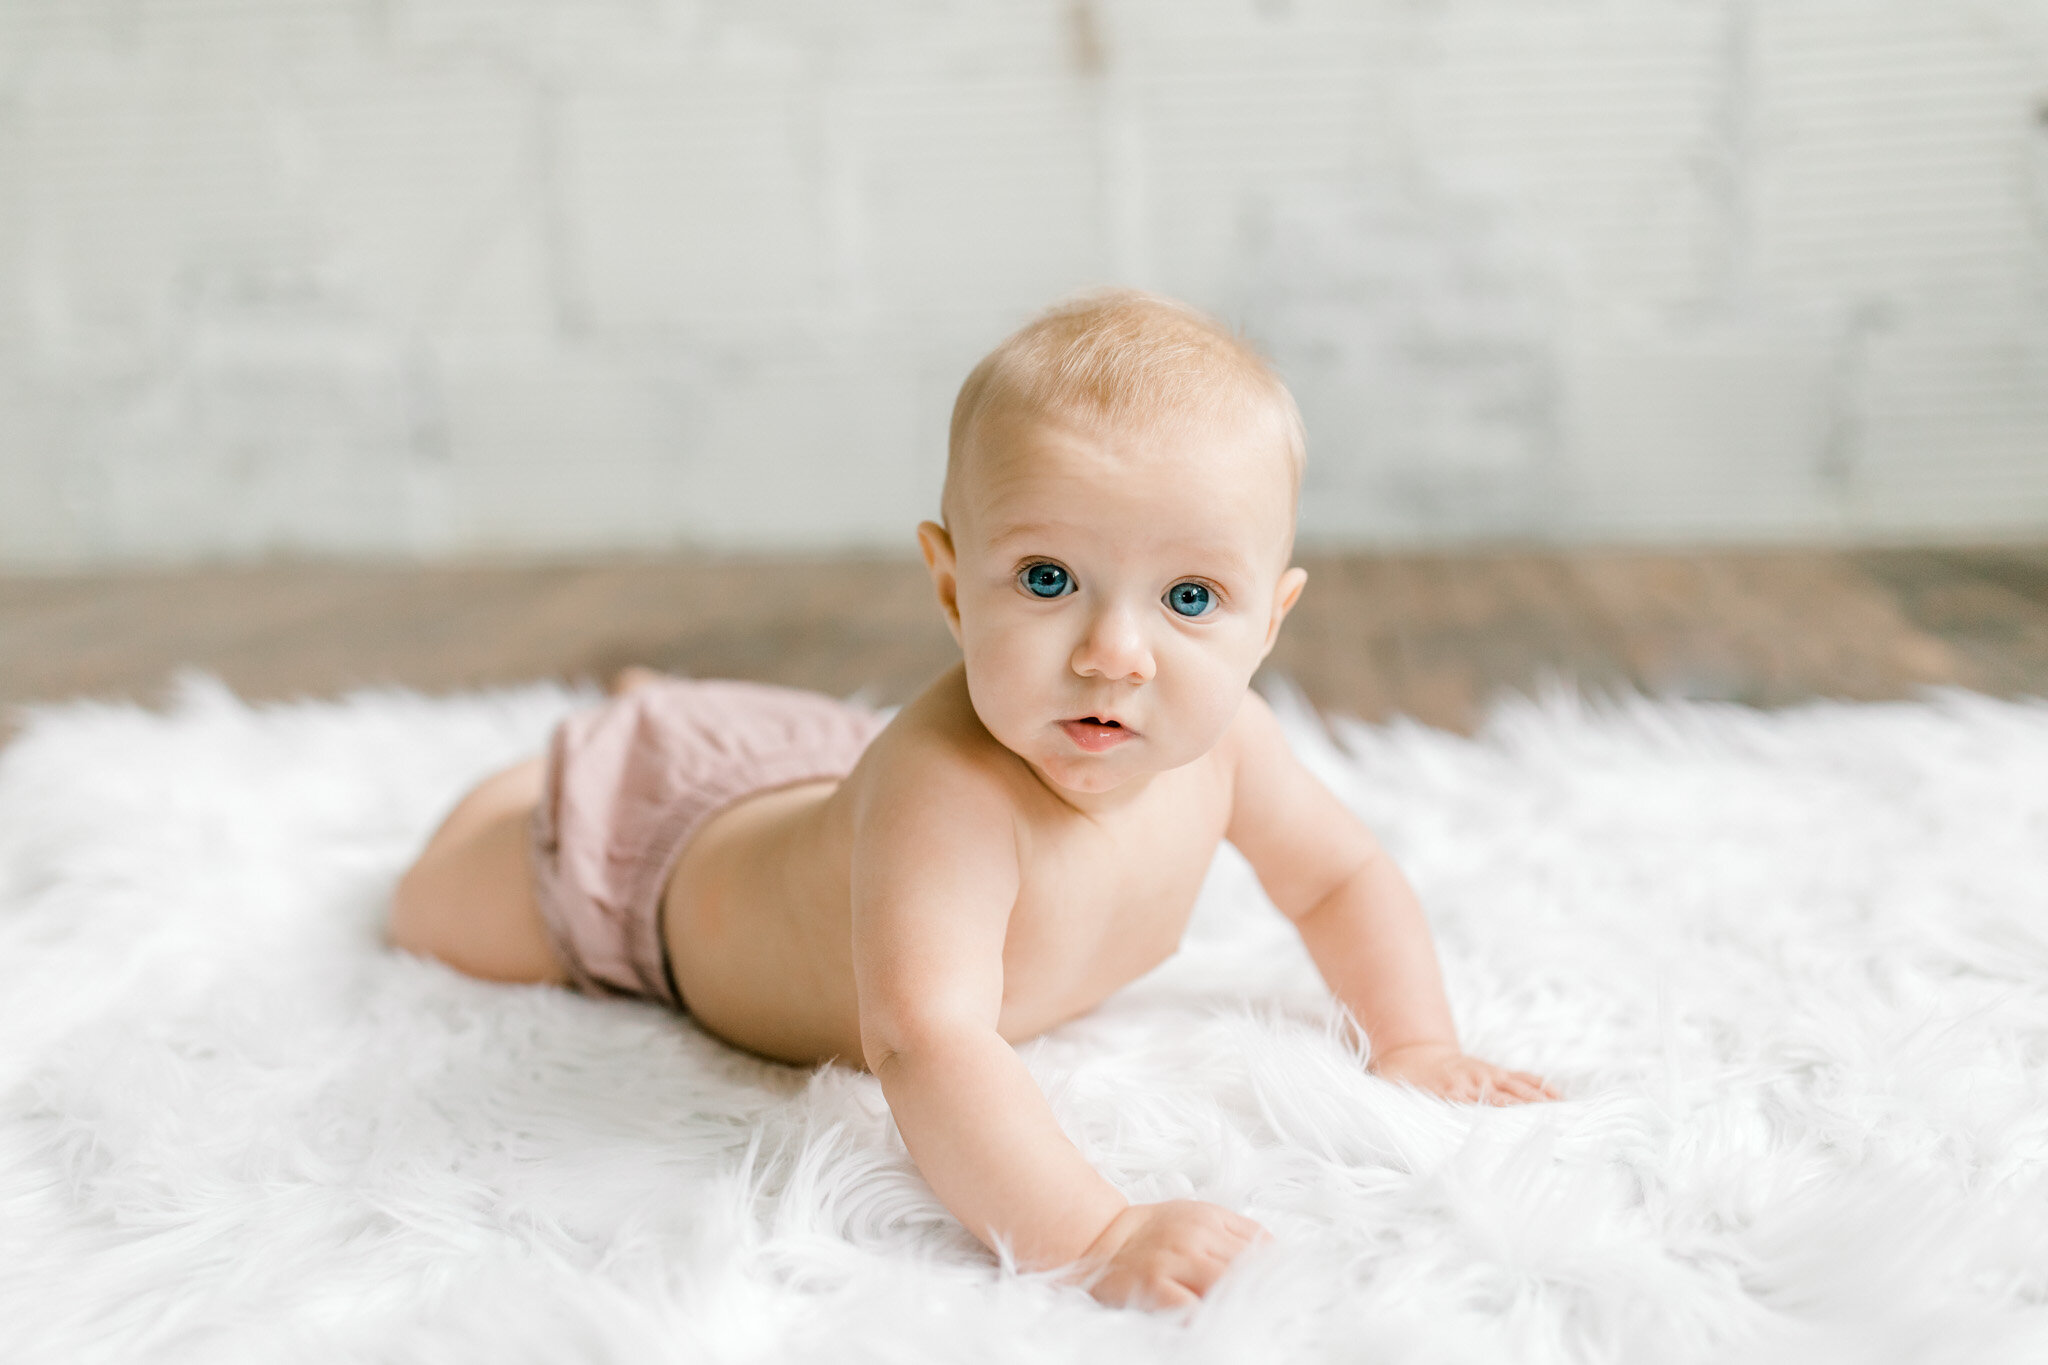 Baby girl 6 month milestone session in Grand Rapids studio | Laurenda Marie Photography | Michigan Family Photographer